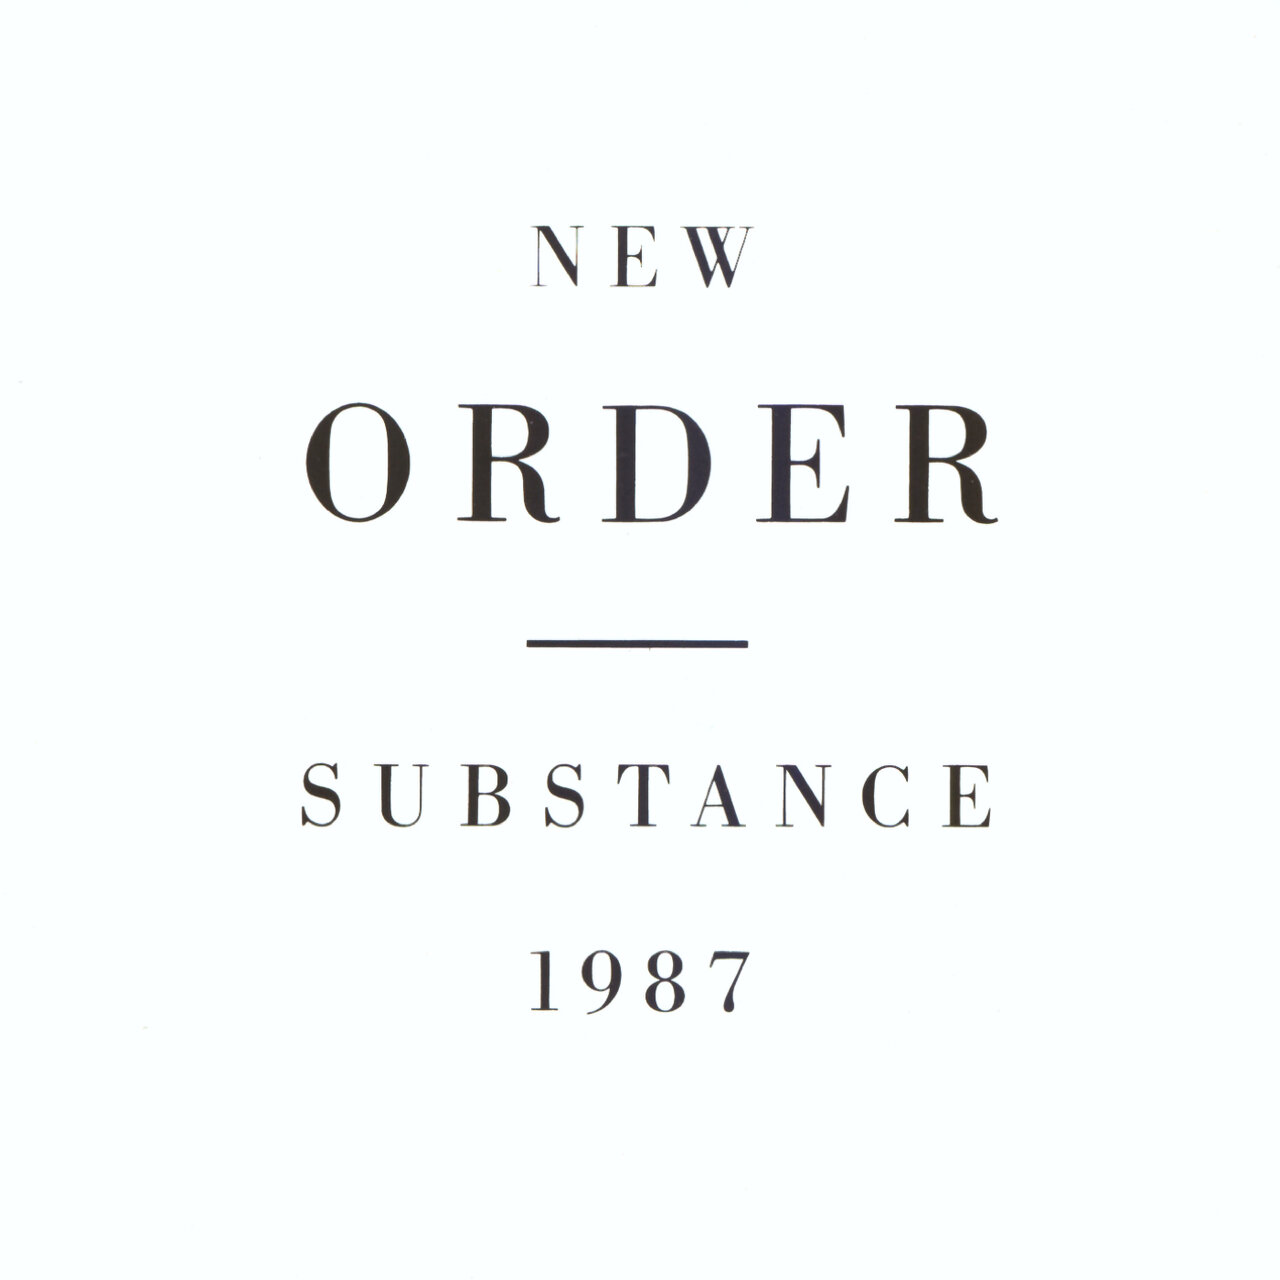 New Order 'Substance' album cover